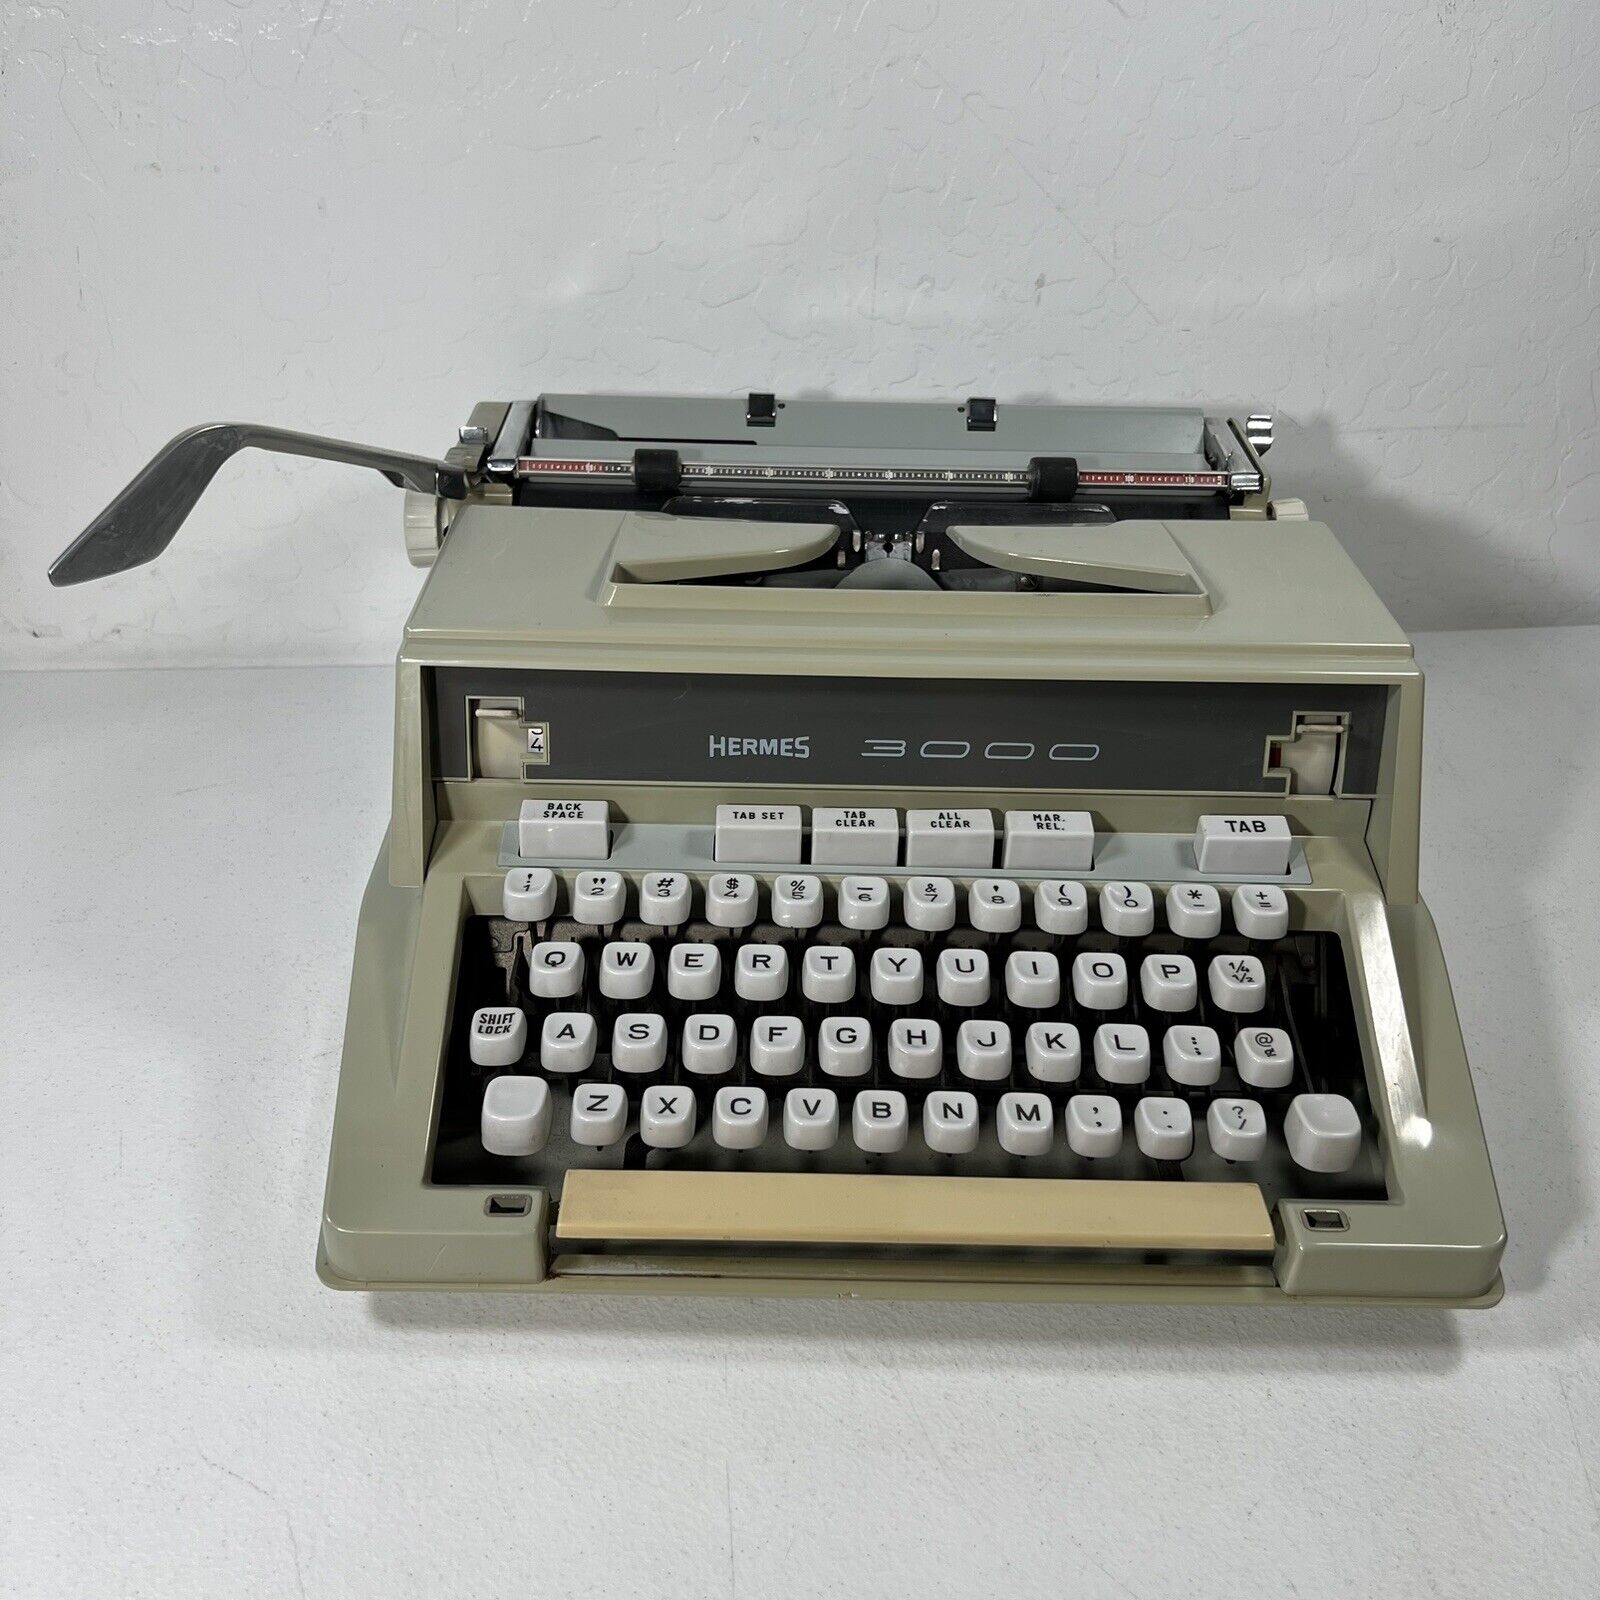 Vintage Hermes 3000 Portable Typewriter w/ Hard Case Made In France TESTED WORKS